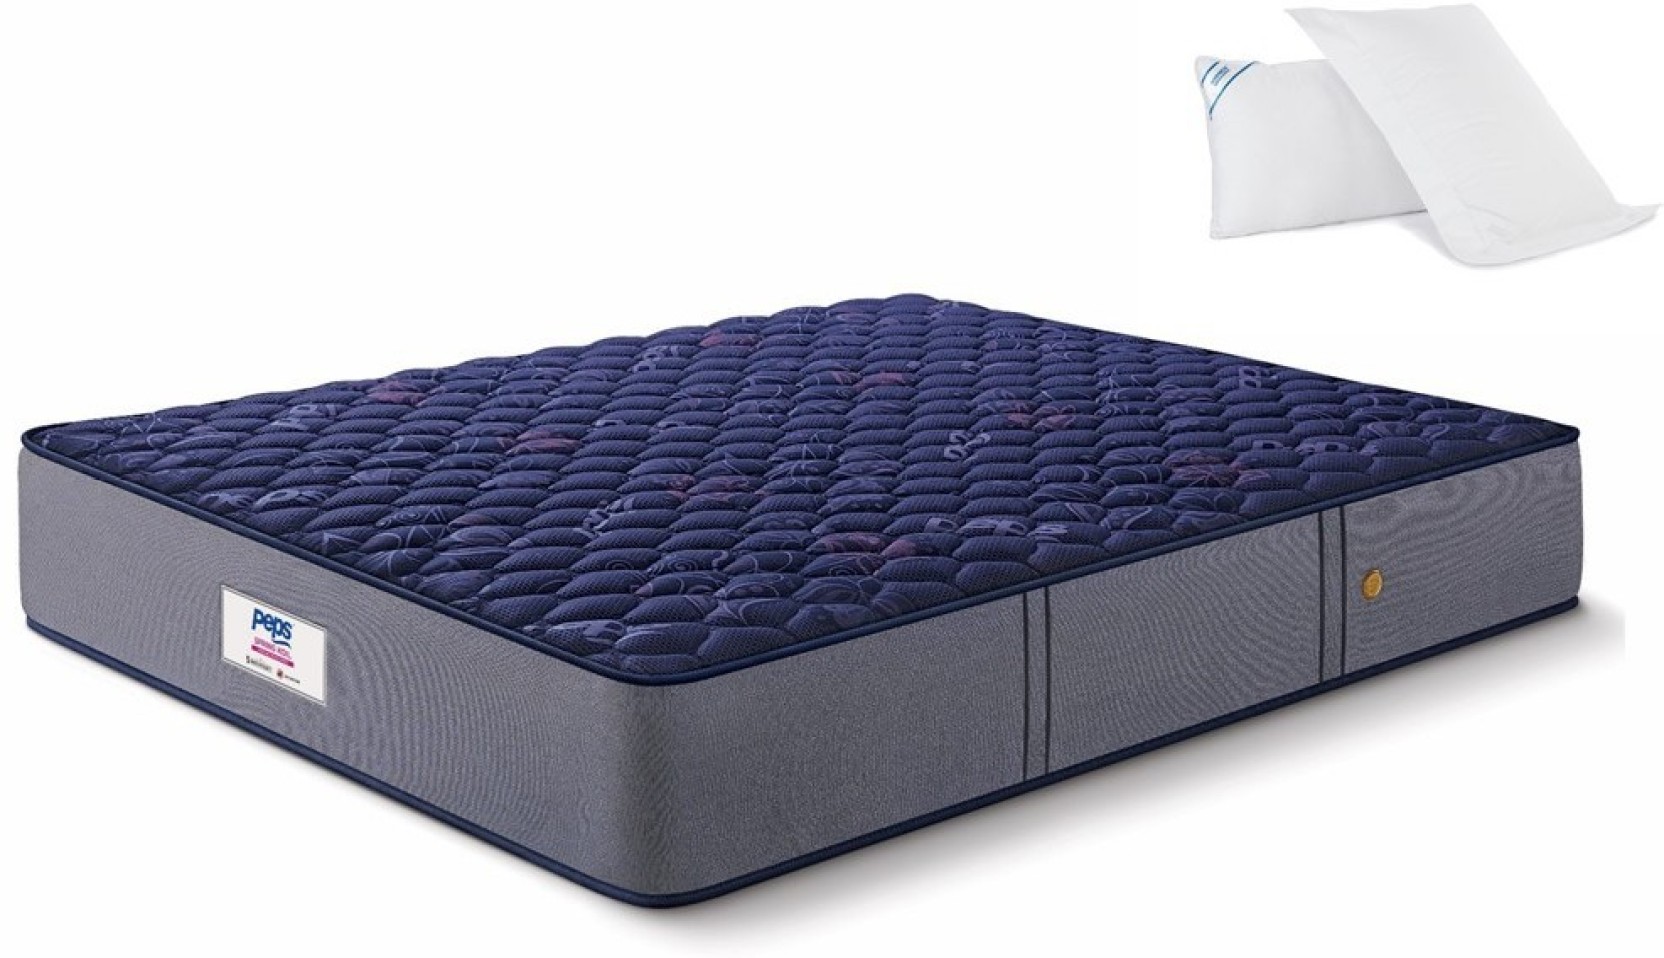 peps memory foam mattress price